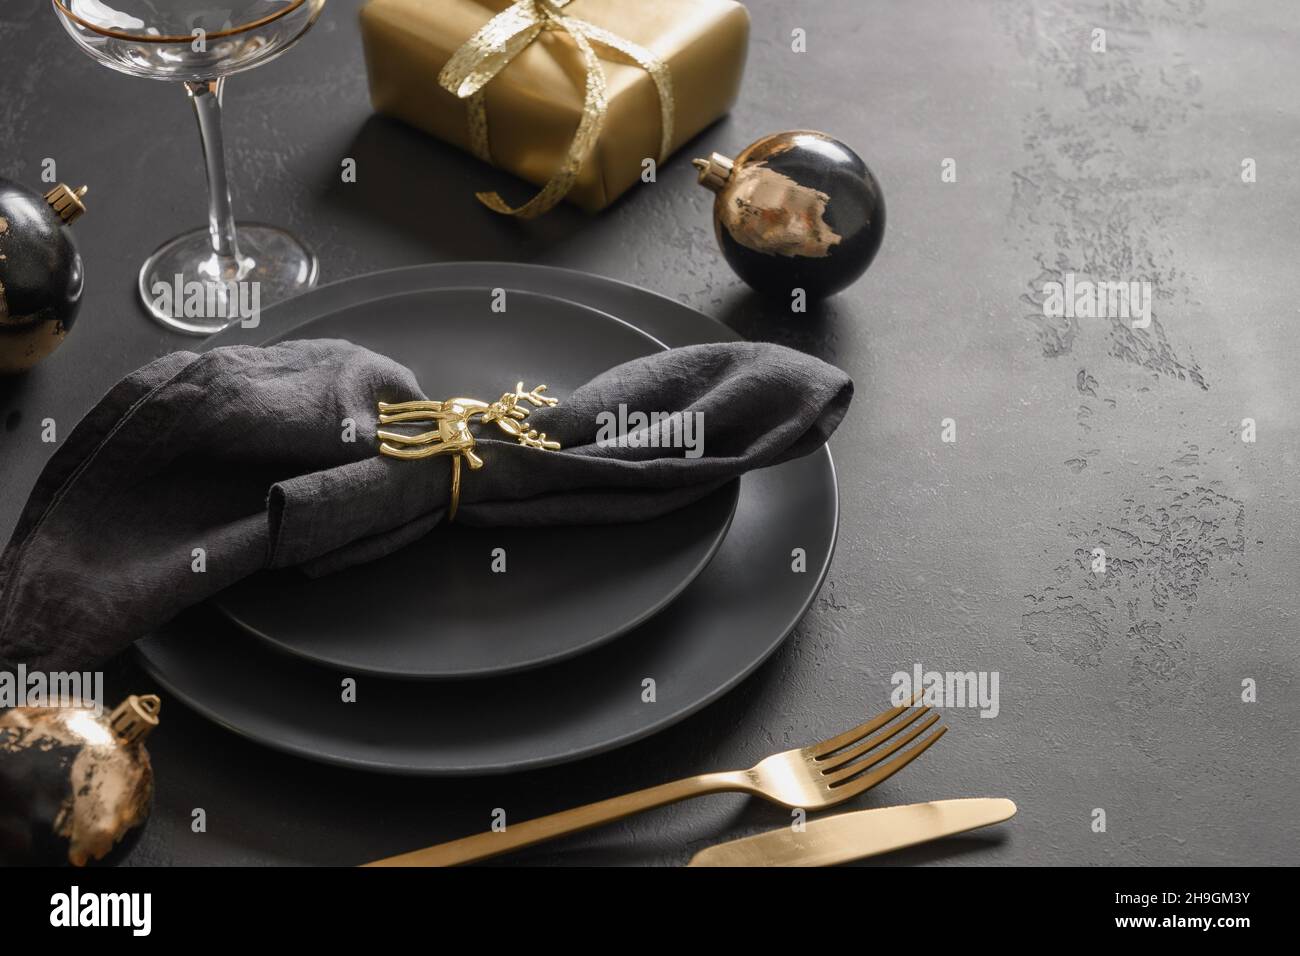 Mesa de Navidad con platos negros oscuros, anillo de ciervo dorado